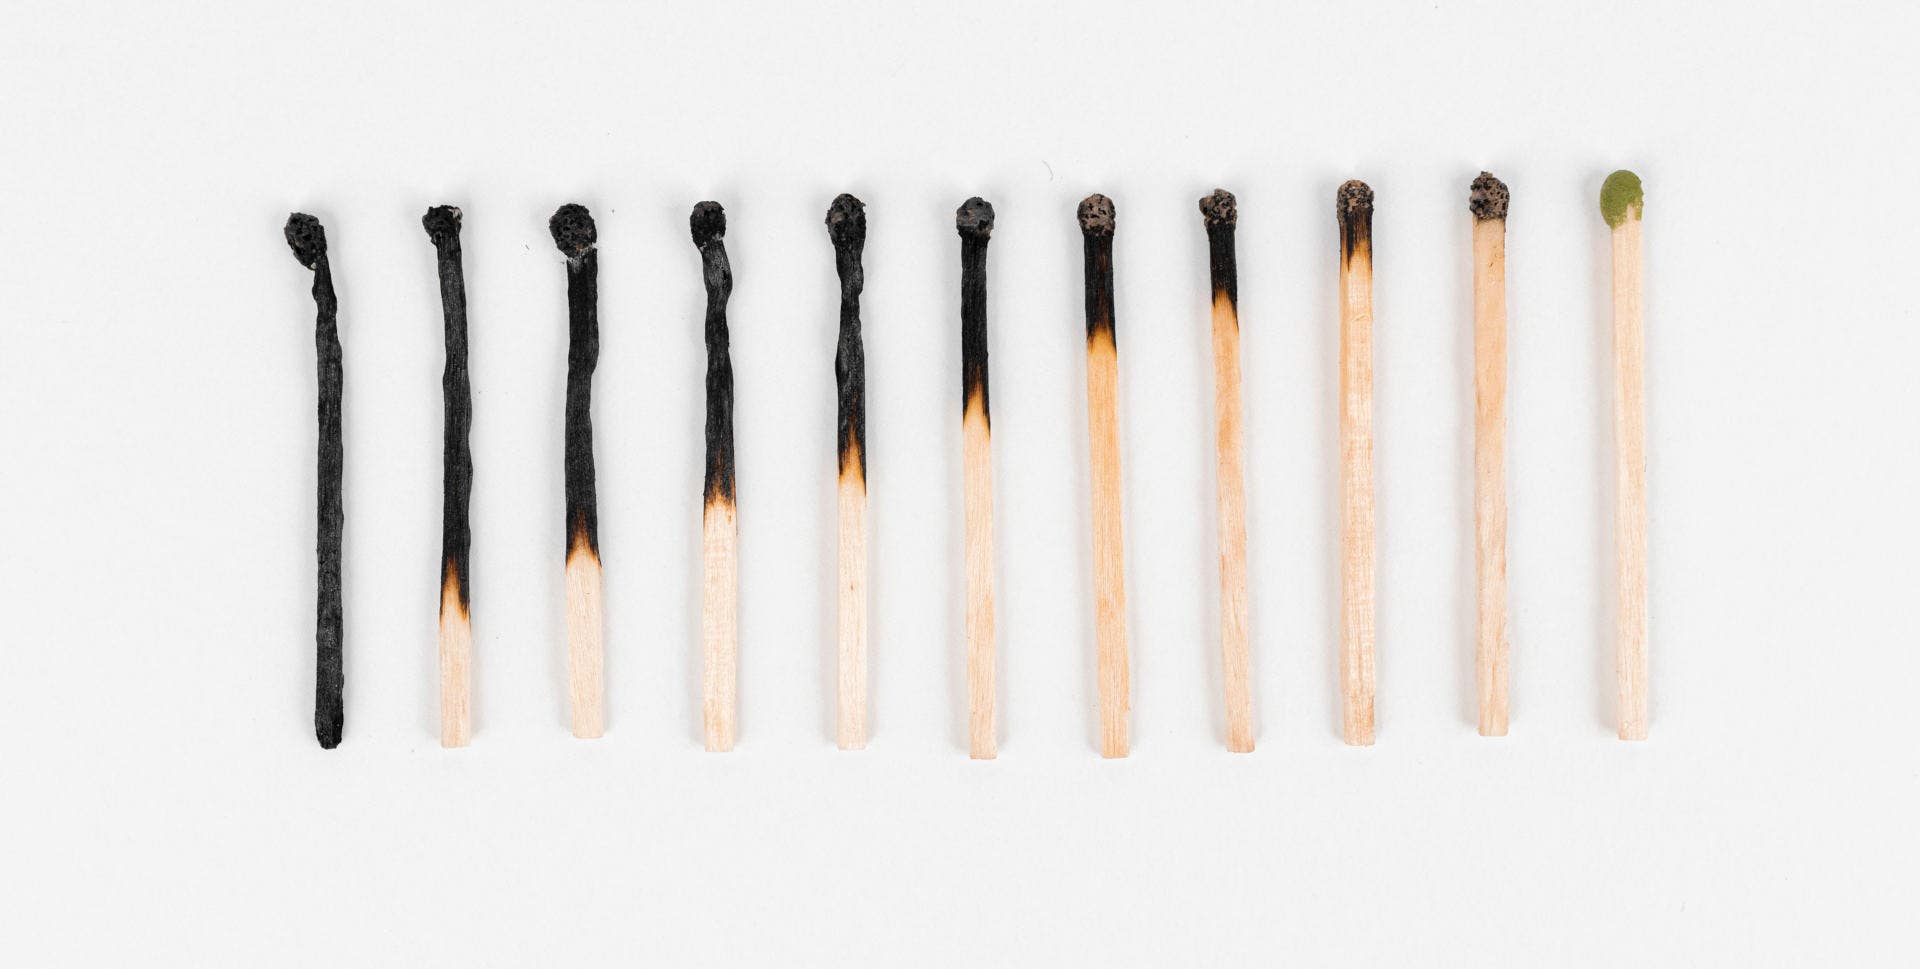 burnt matchsticks (Image)